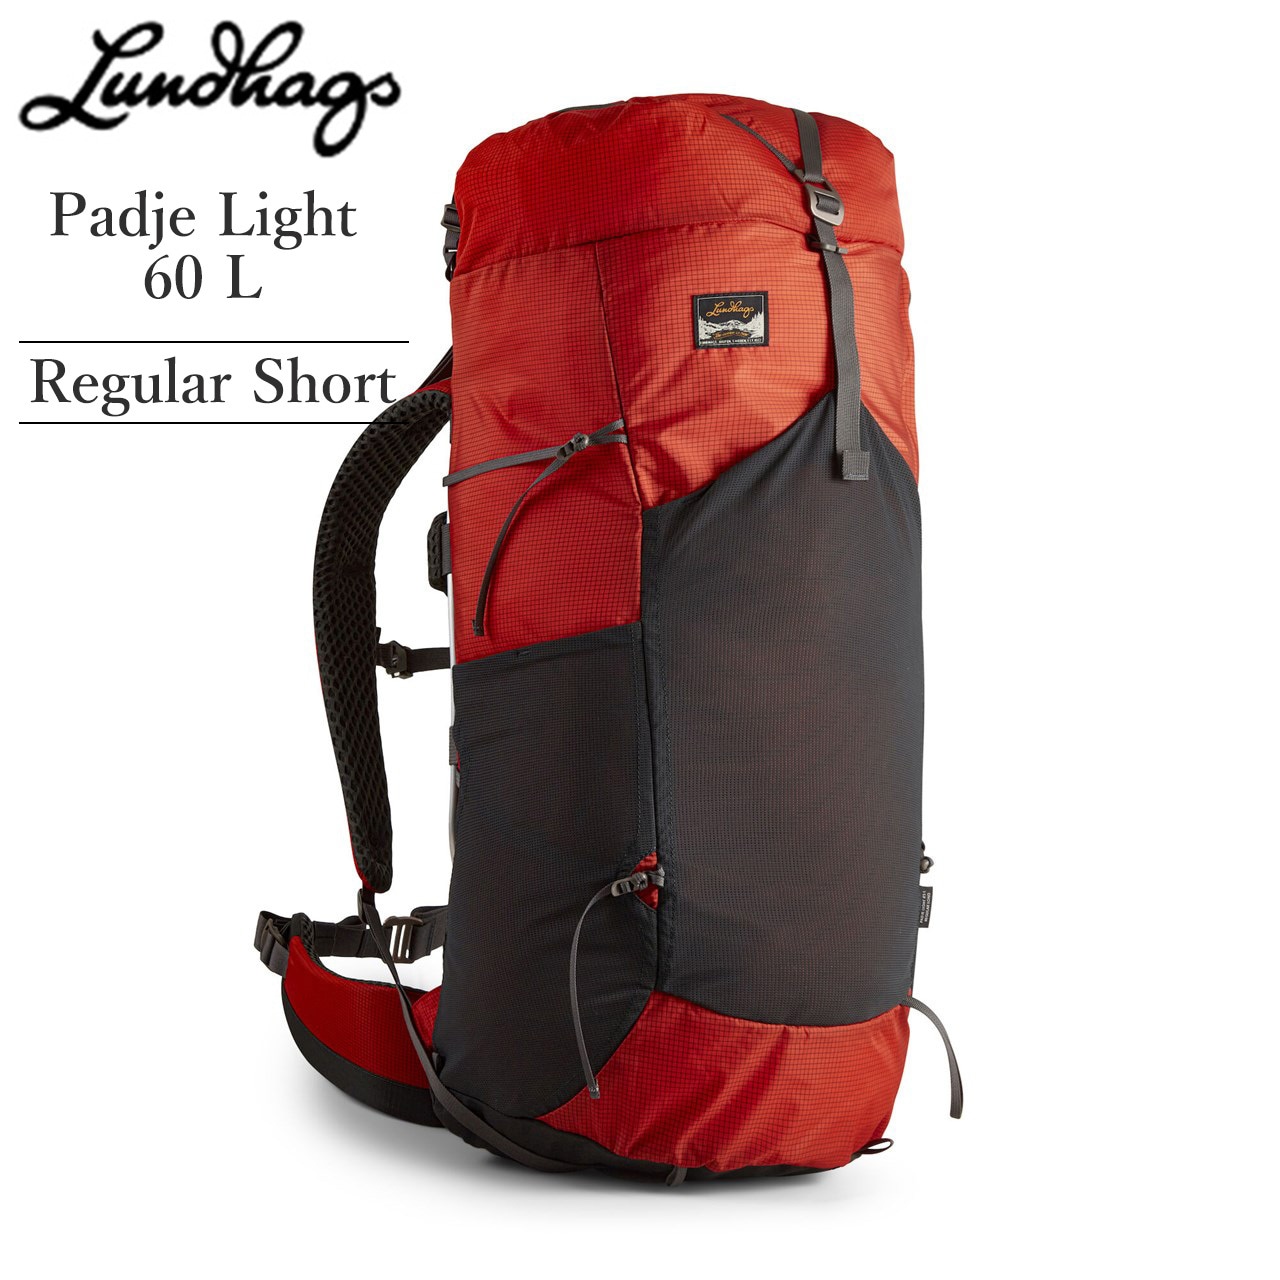 Lundhags 北欧生まれの 高機能 防水 バックパック Padje Light 60 L Regular Short 大容量 60L